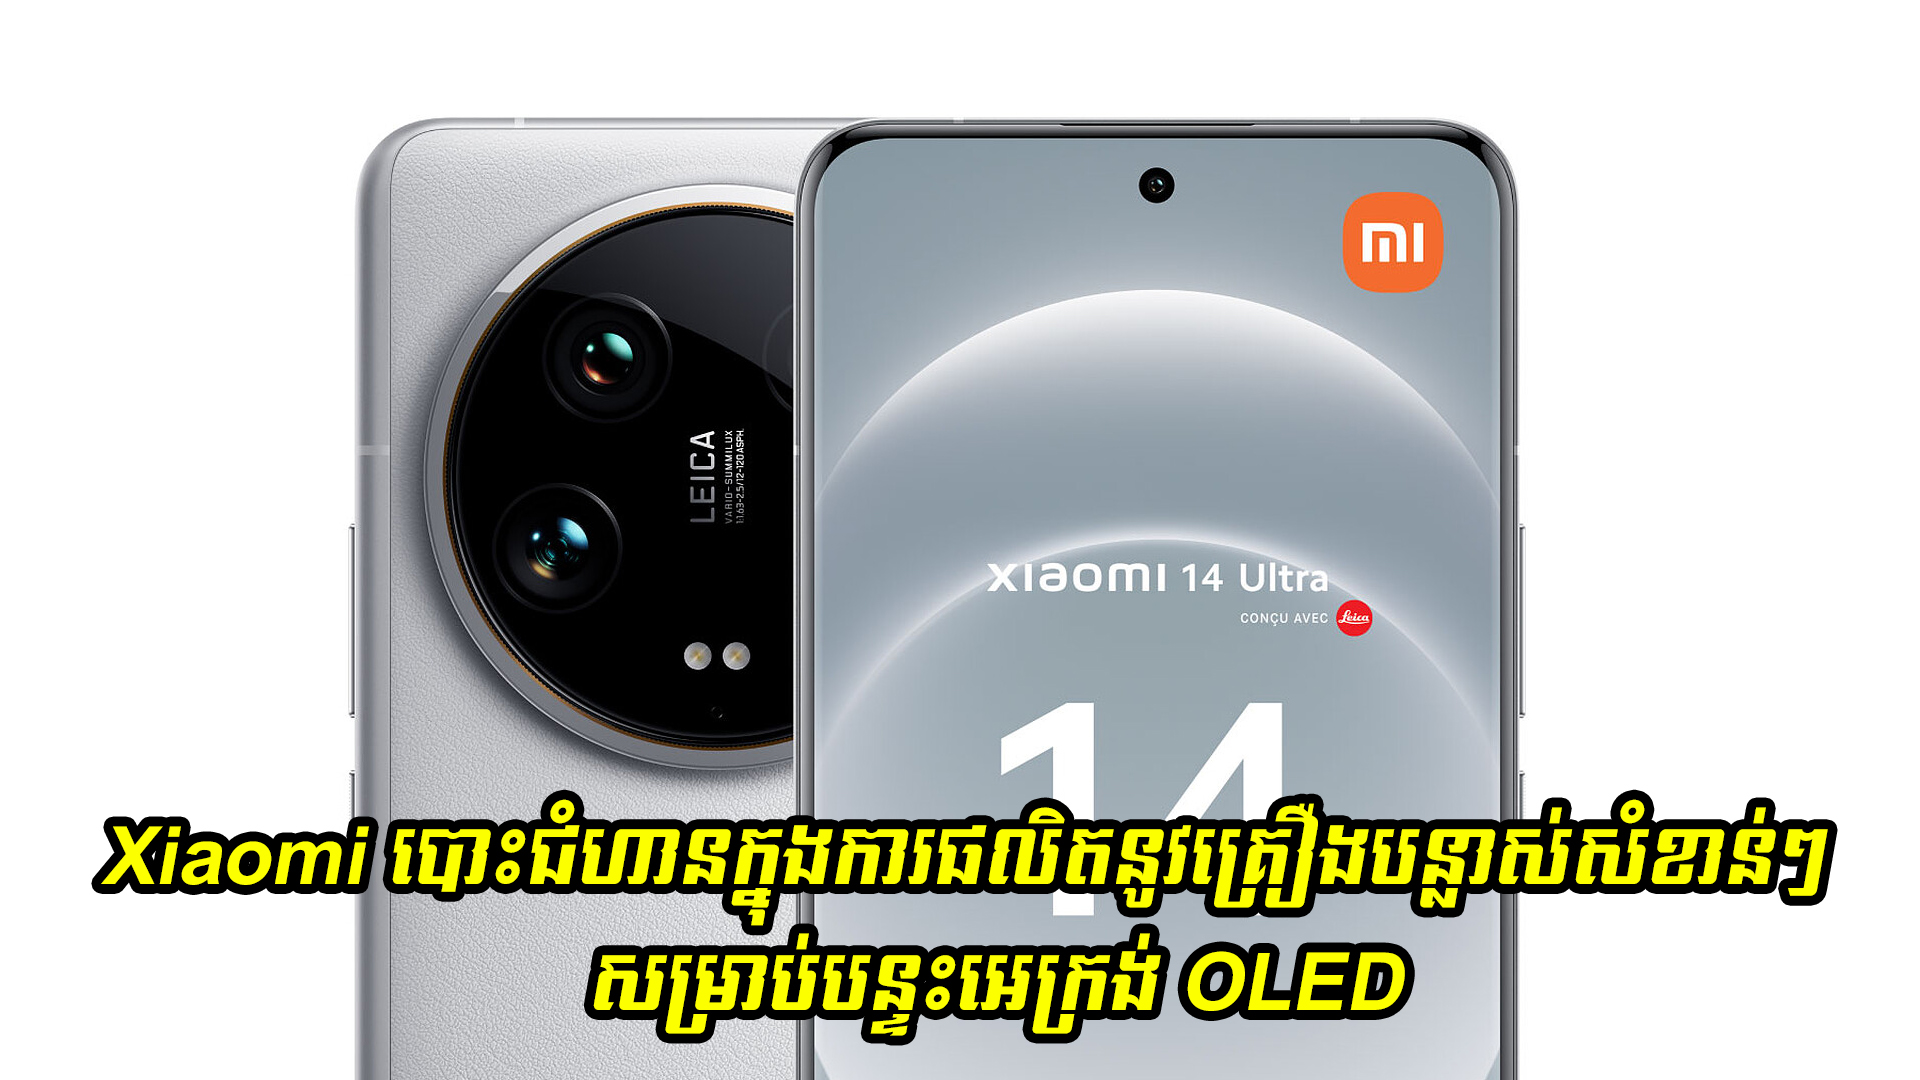 Xiaomi បោះជំហានក្នុងការផលិតនូវគ្រឿងបន្លាស់សំខាន់ៗសម្រាប់បន្ទះអេក្រង់ OLED